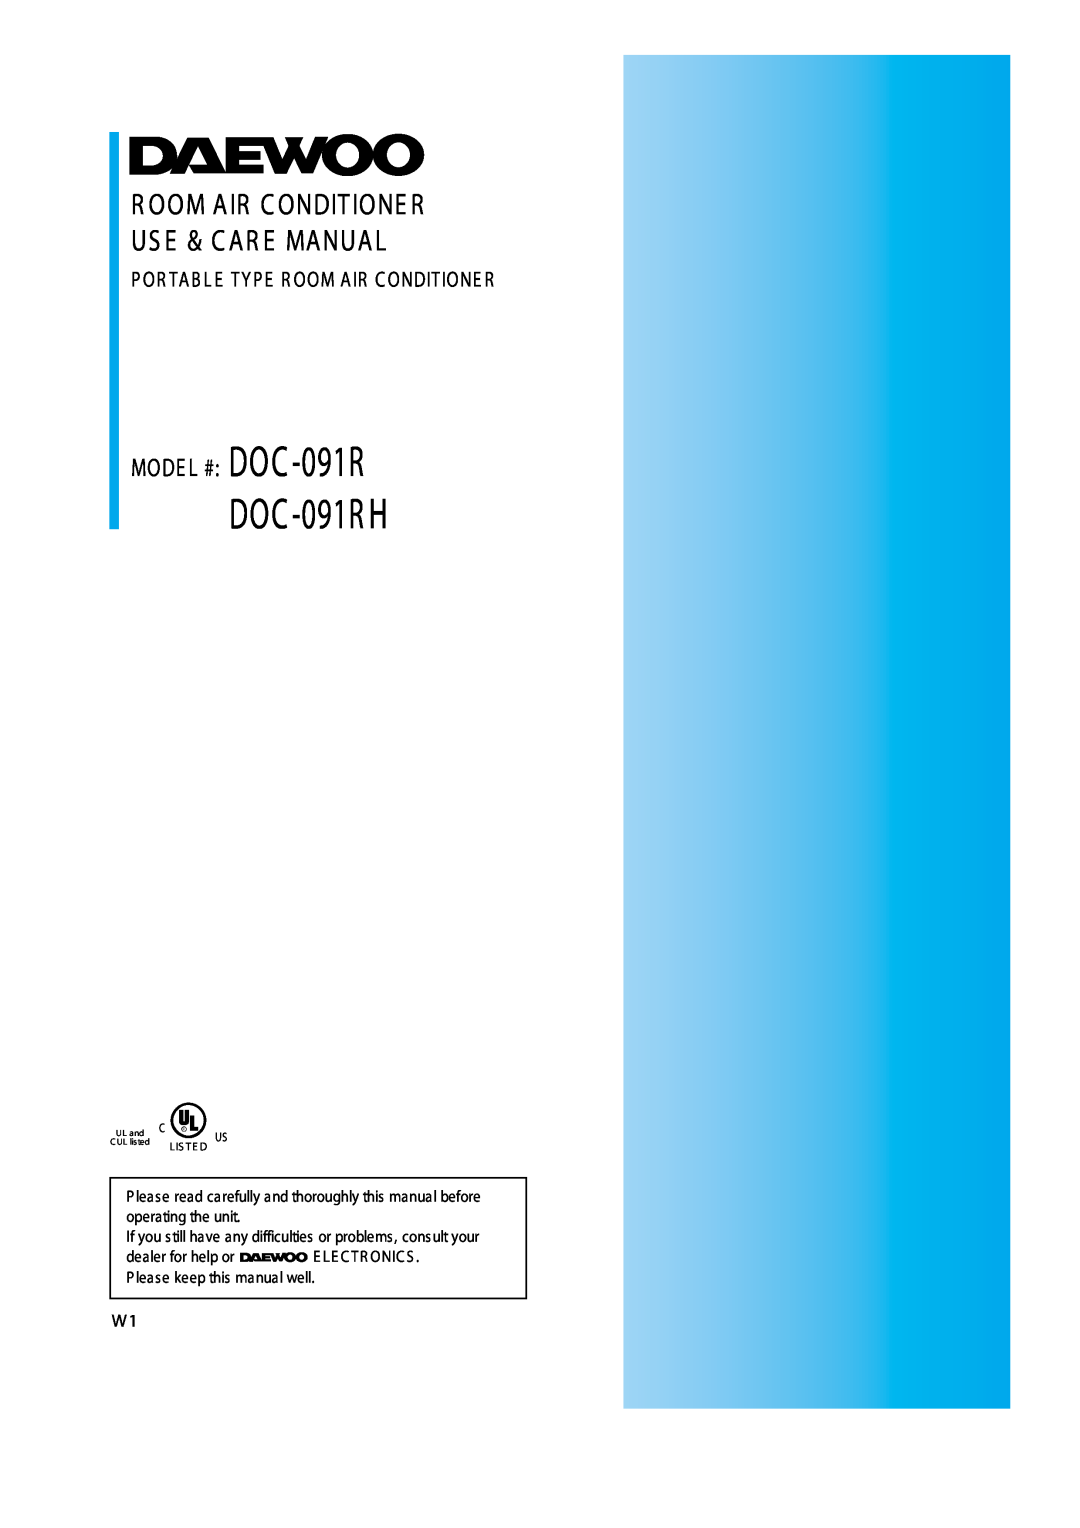 Daewoo DOC-091RH manual DOC -091RH, MODE L # DOC -091R, R Oom Air C Onditione R Us E & C Ar E Manual 